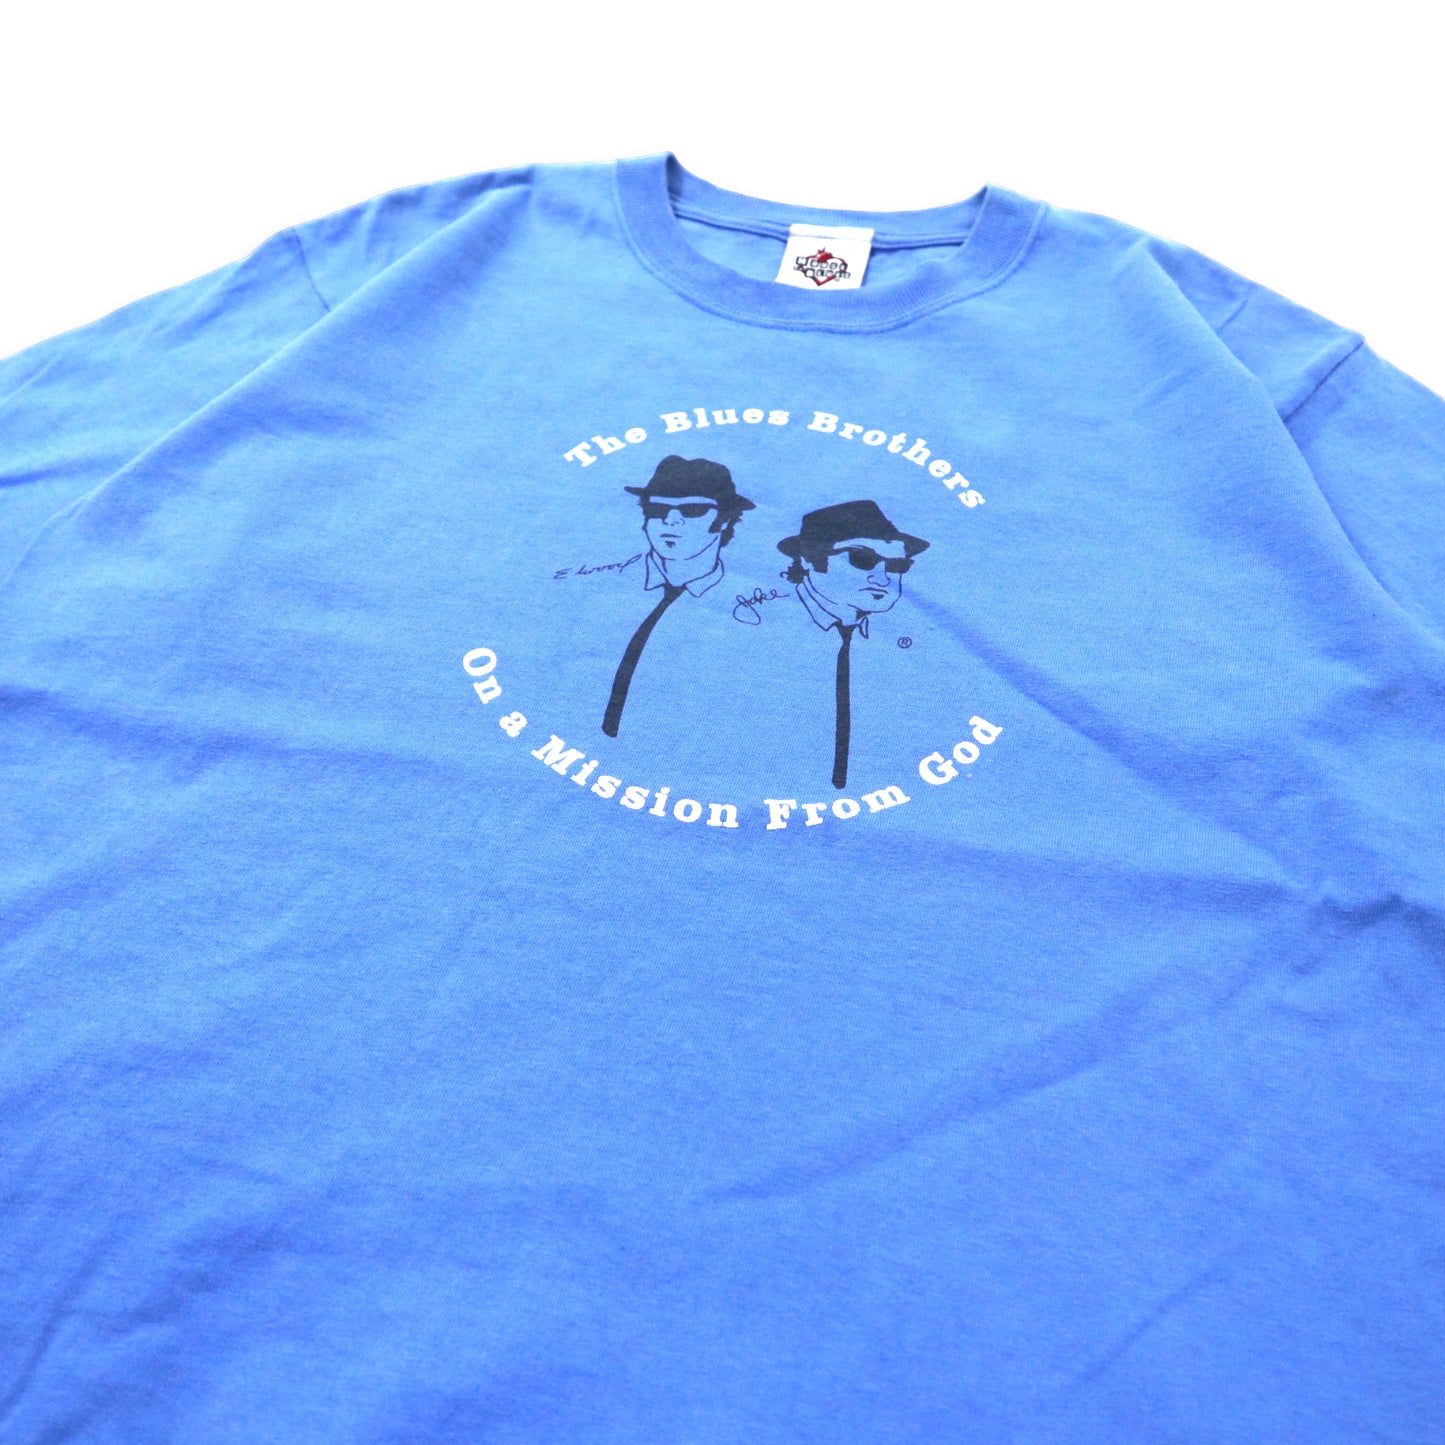 USA製 THE BLUES BROTHERS ブルースブラザーズ バンド ムービー Tシャツ XL ブルー コットン HOUSE OF BLUES